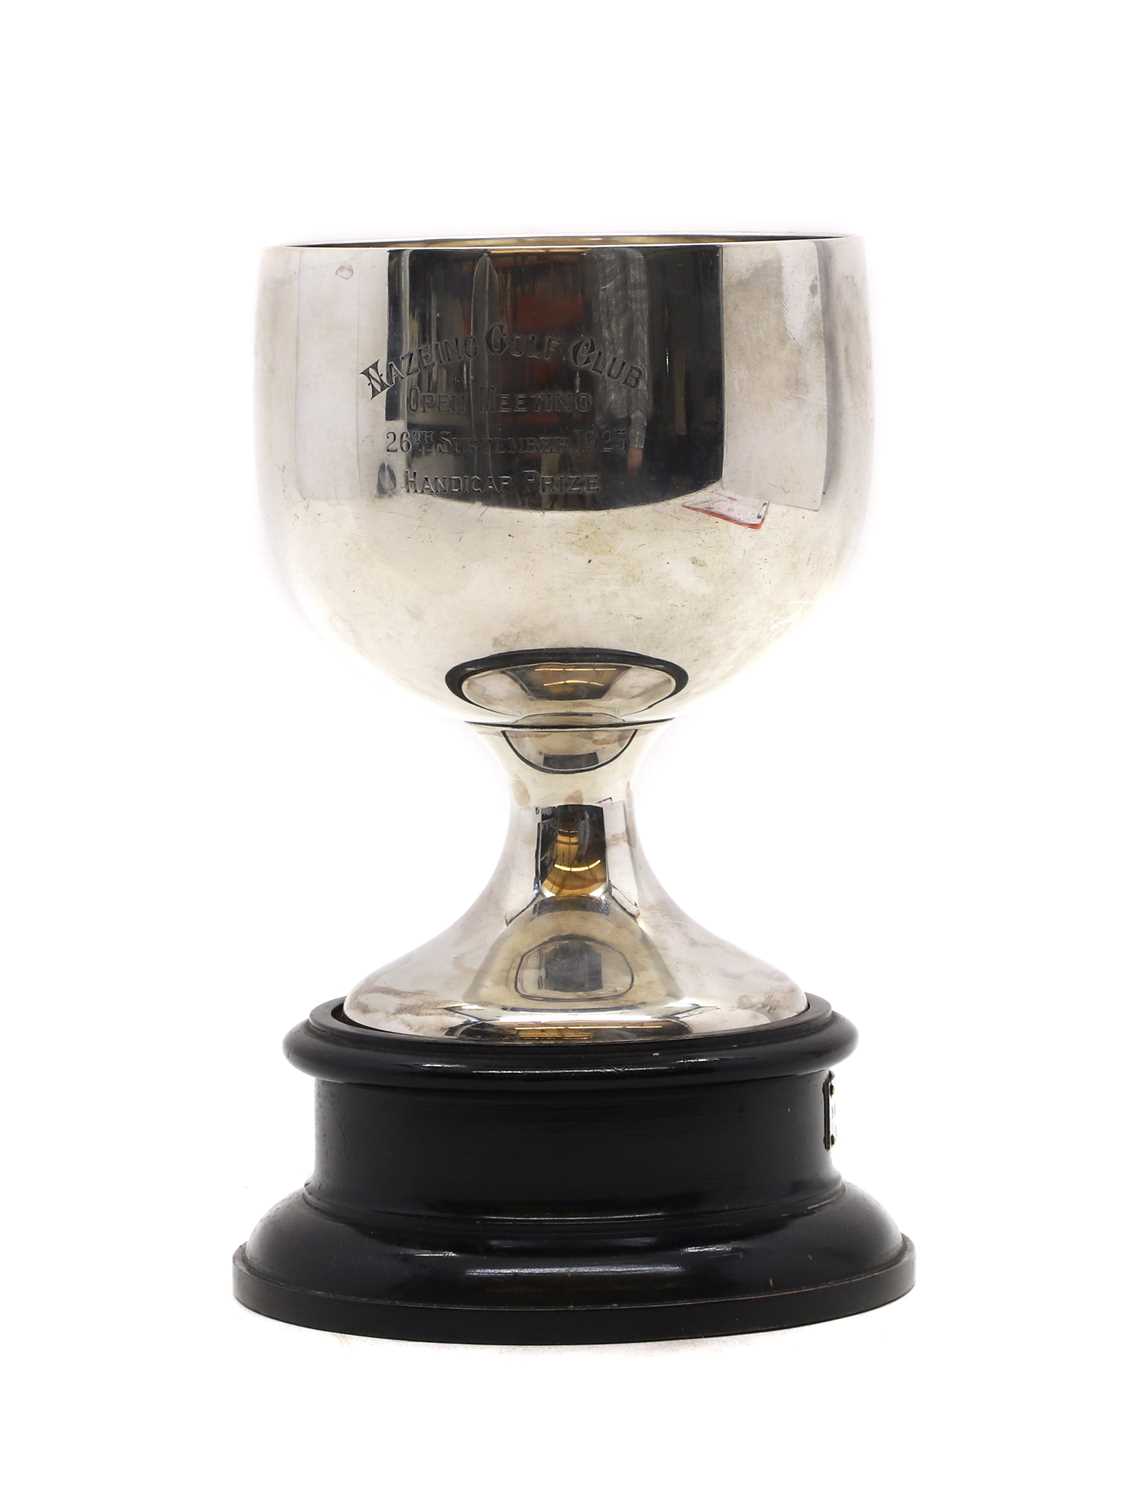 A silver trophy